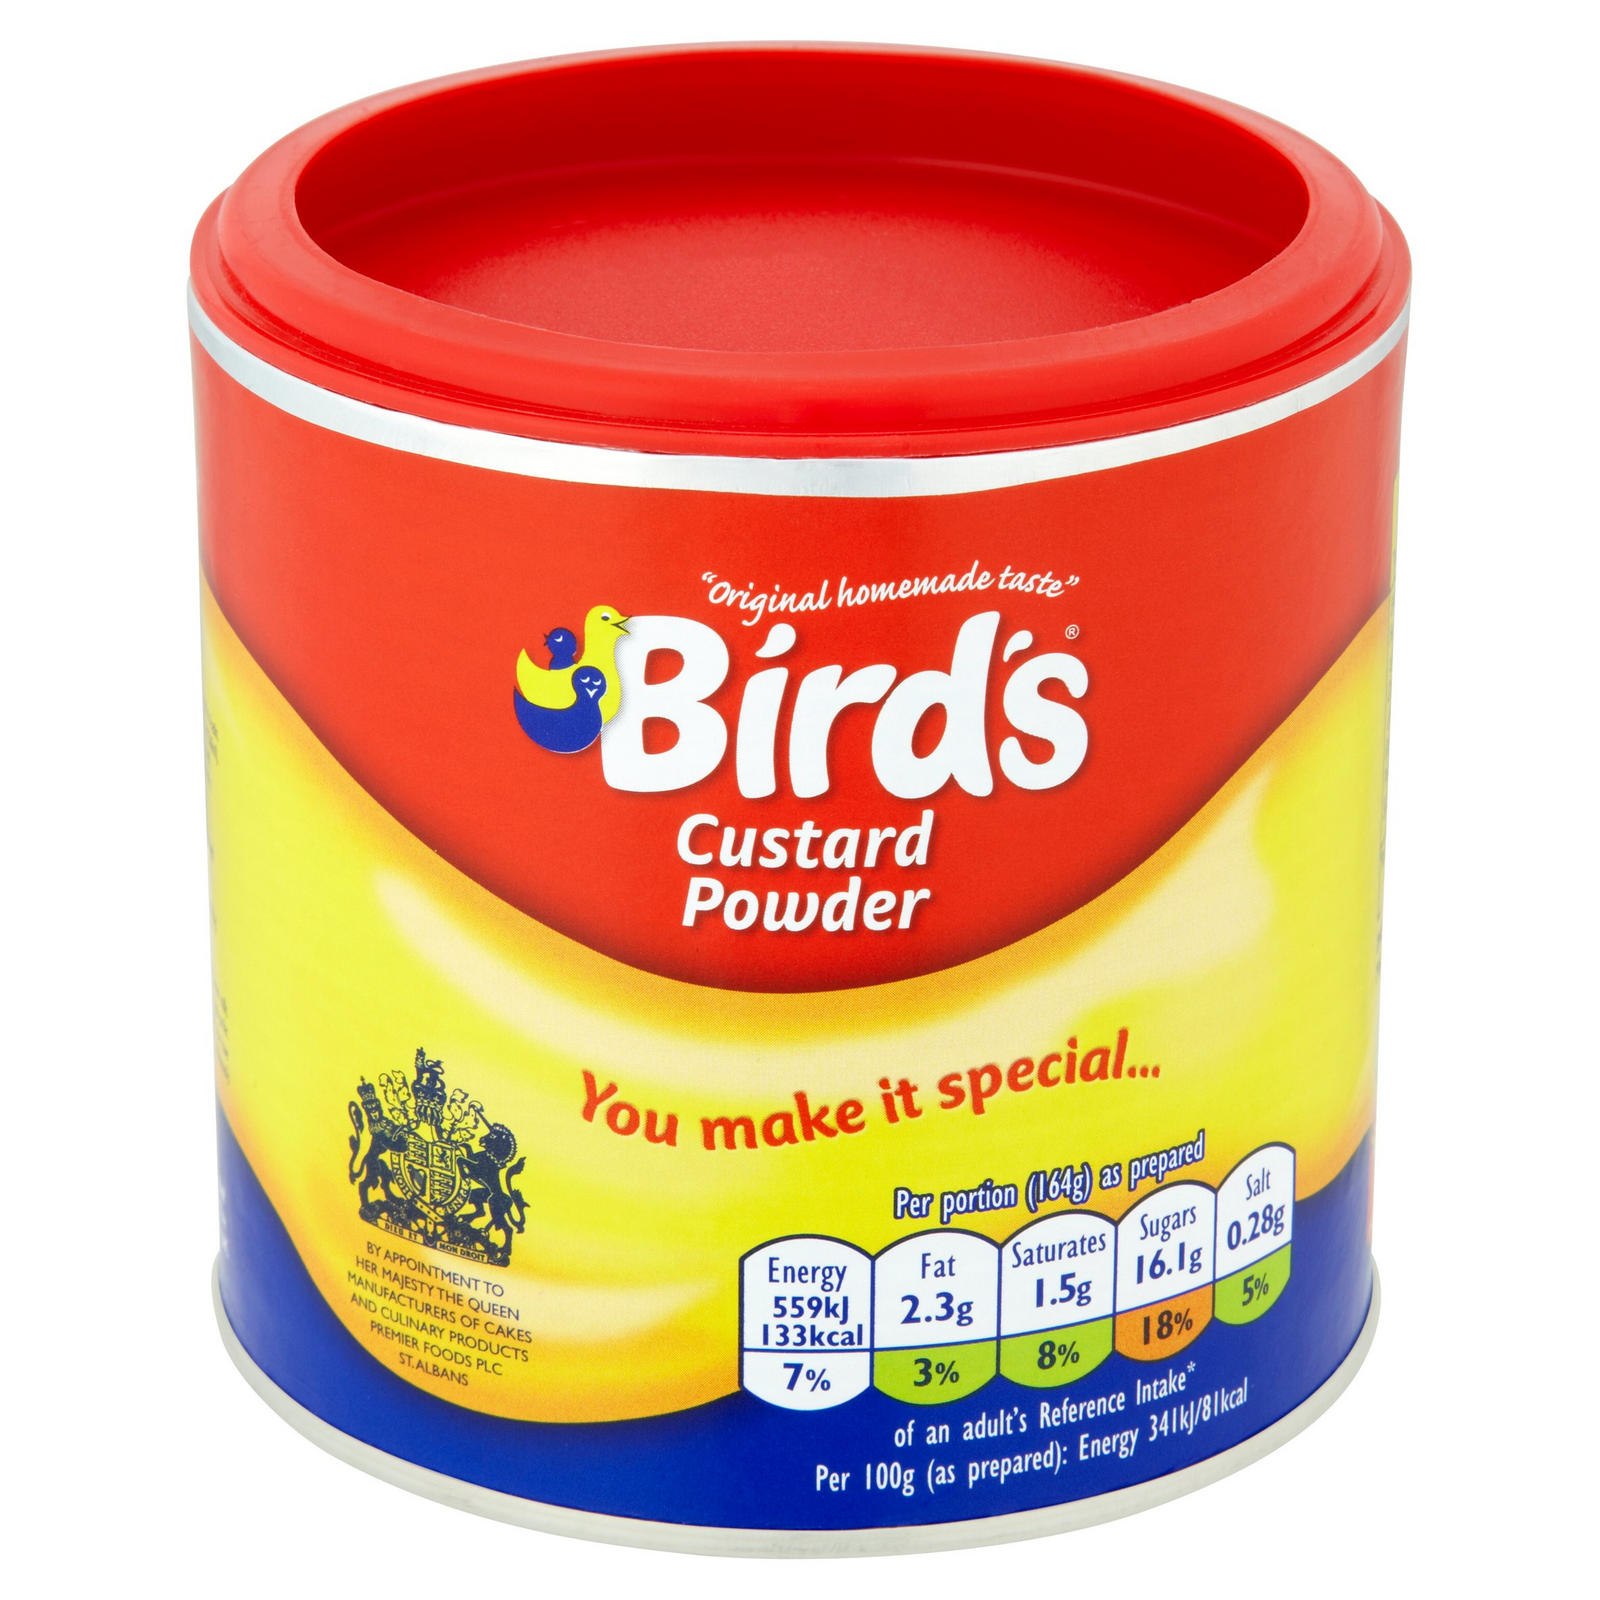 Bird's Original Custard Powder 300g